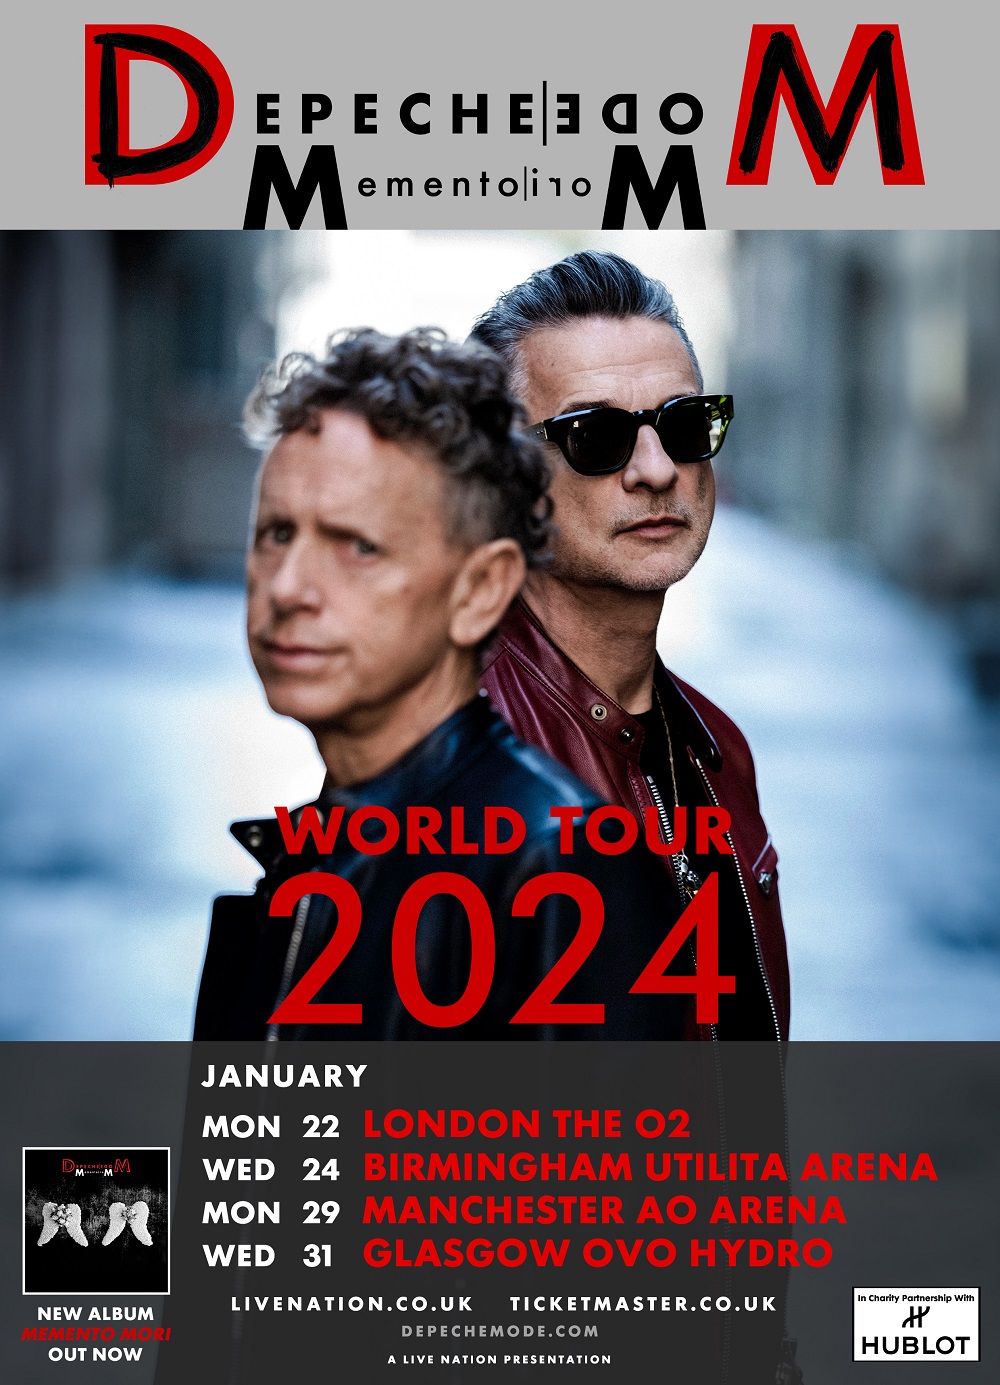 depeche mode european tour 2024